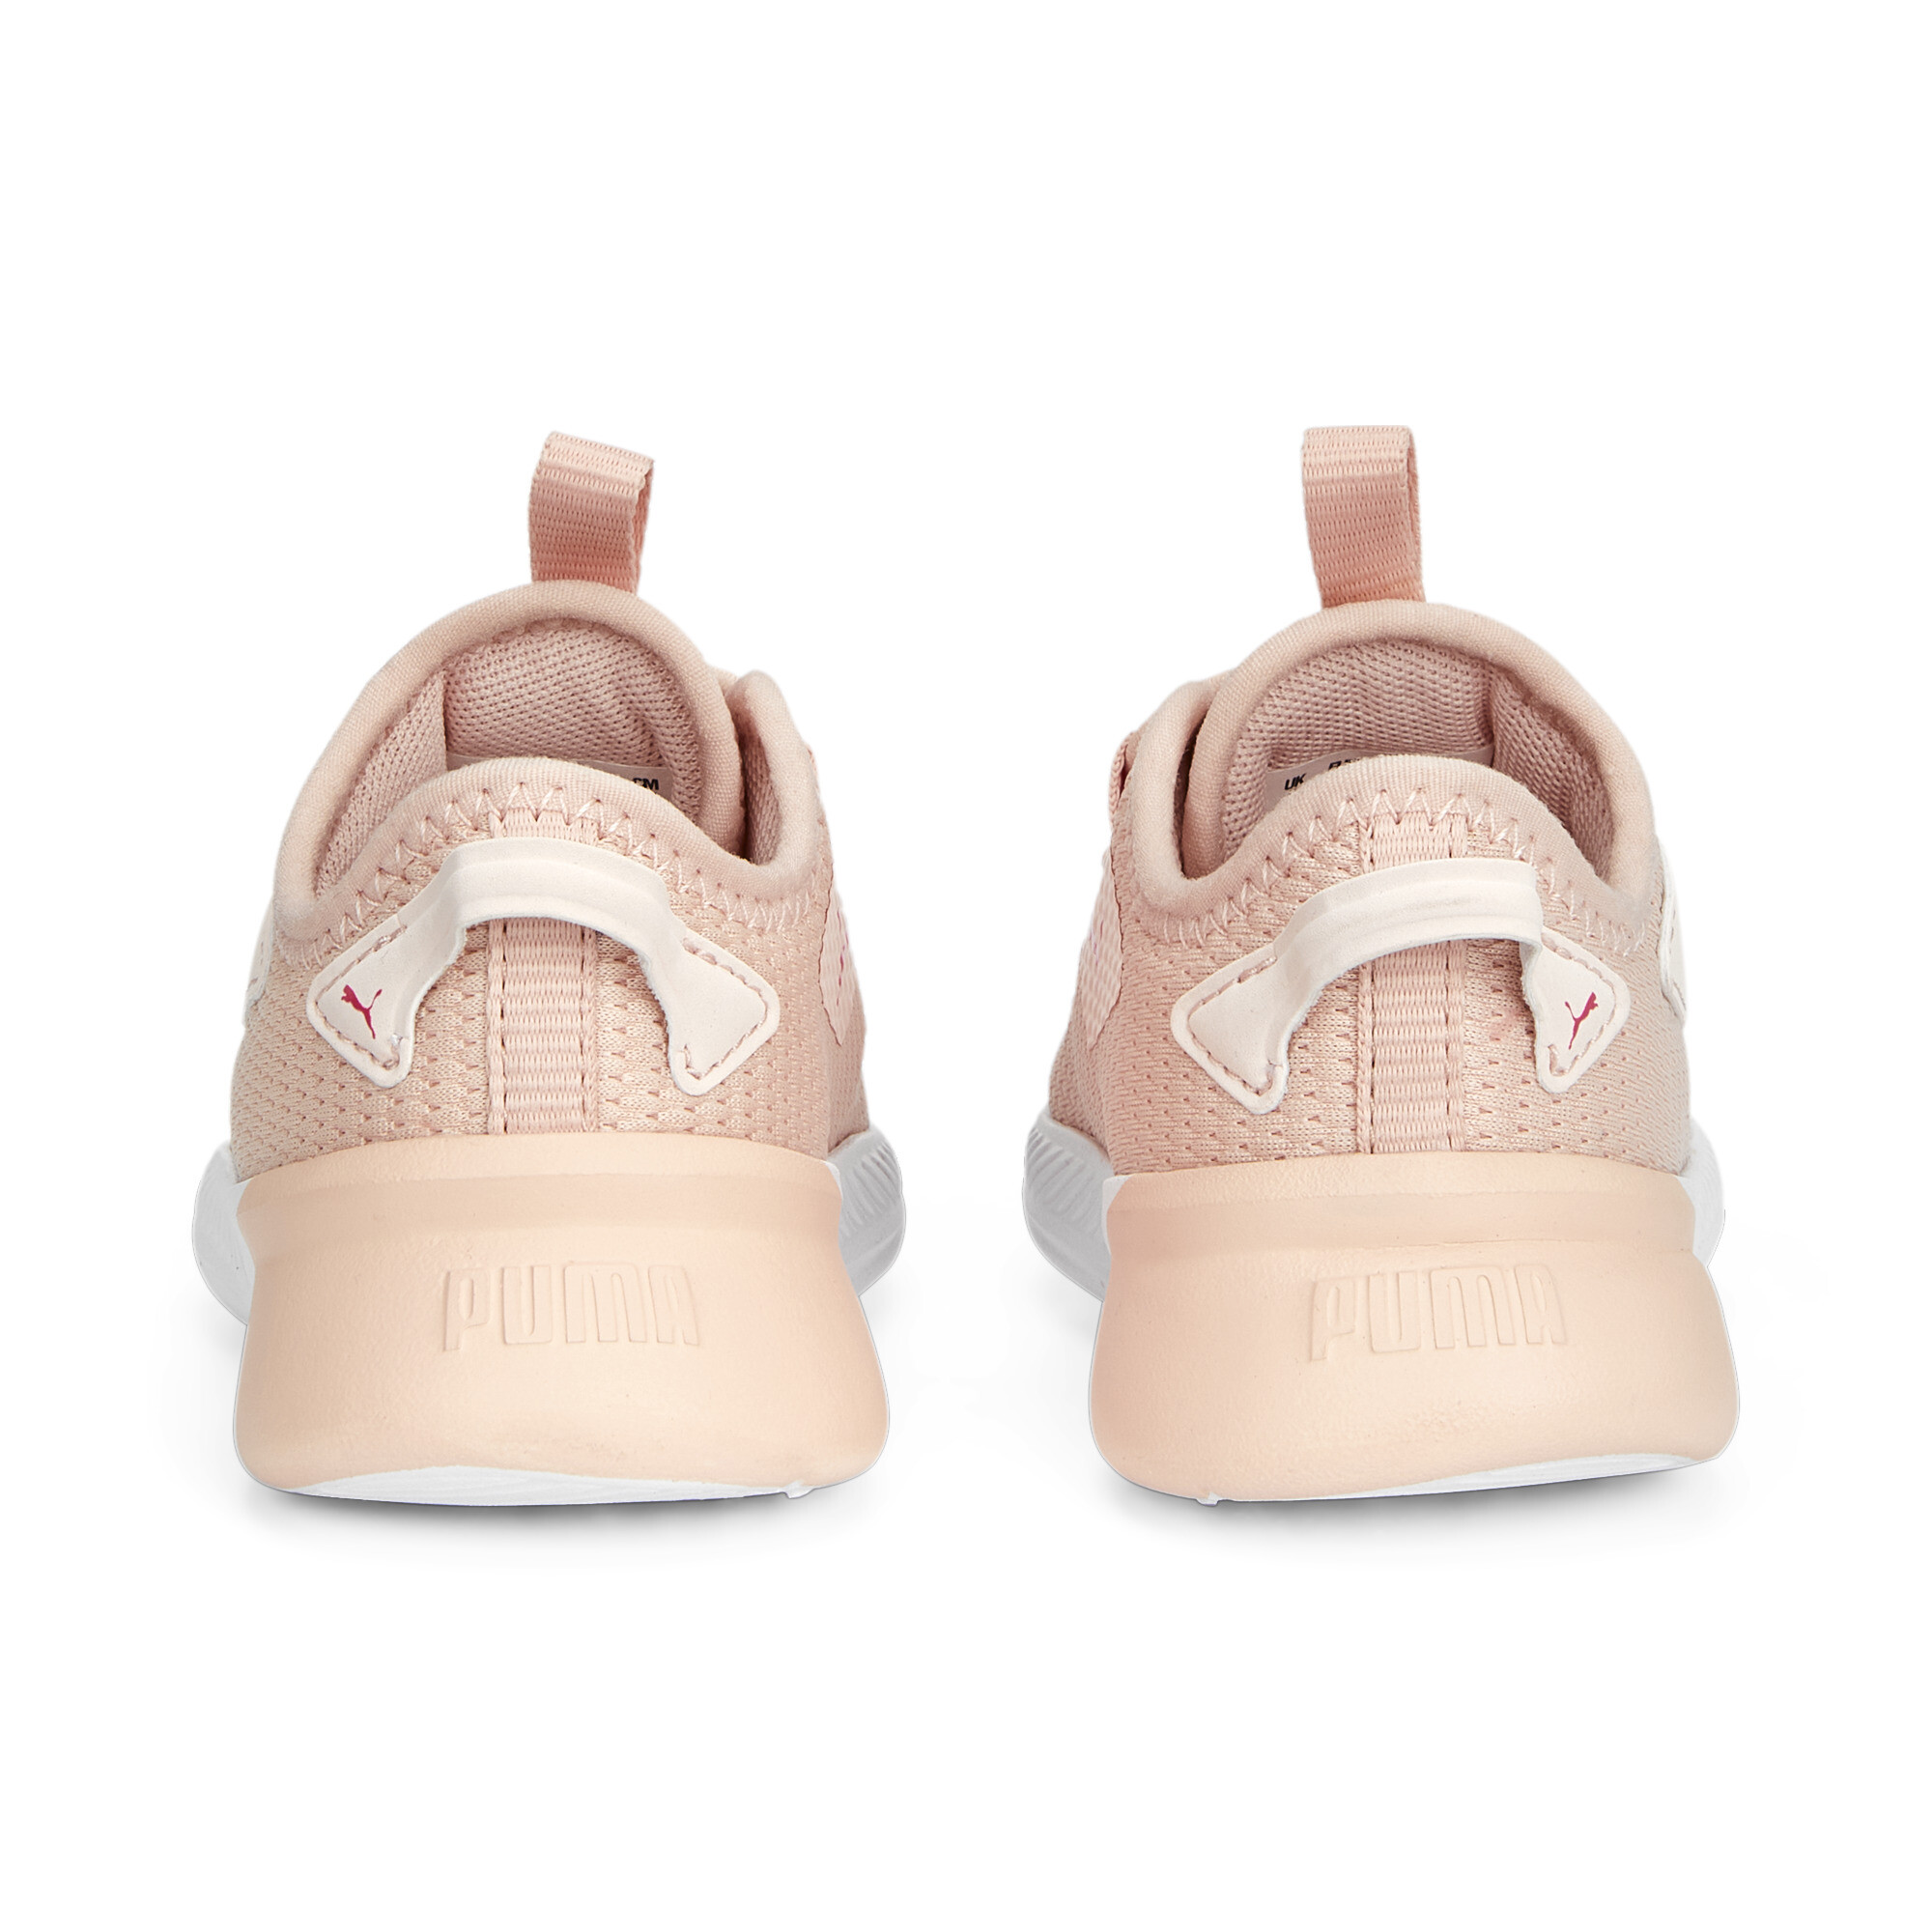 Puma Retaliate 2 AC Sneakers Babies, Pink, Size 21, Shoes